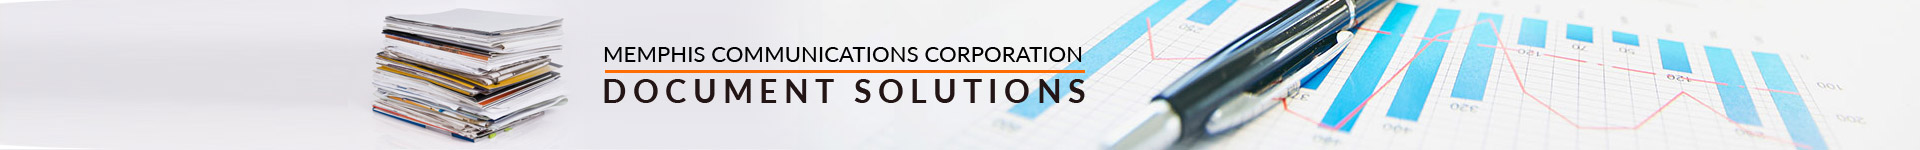 Memphis Communications Document Solutions header